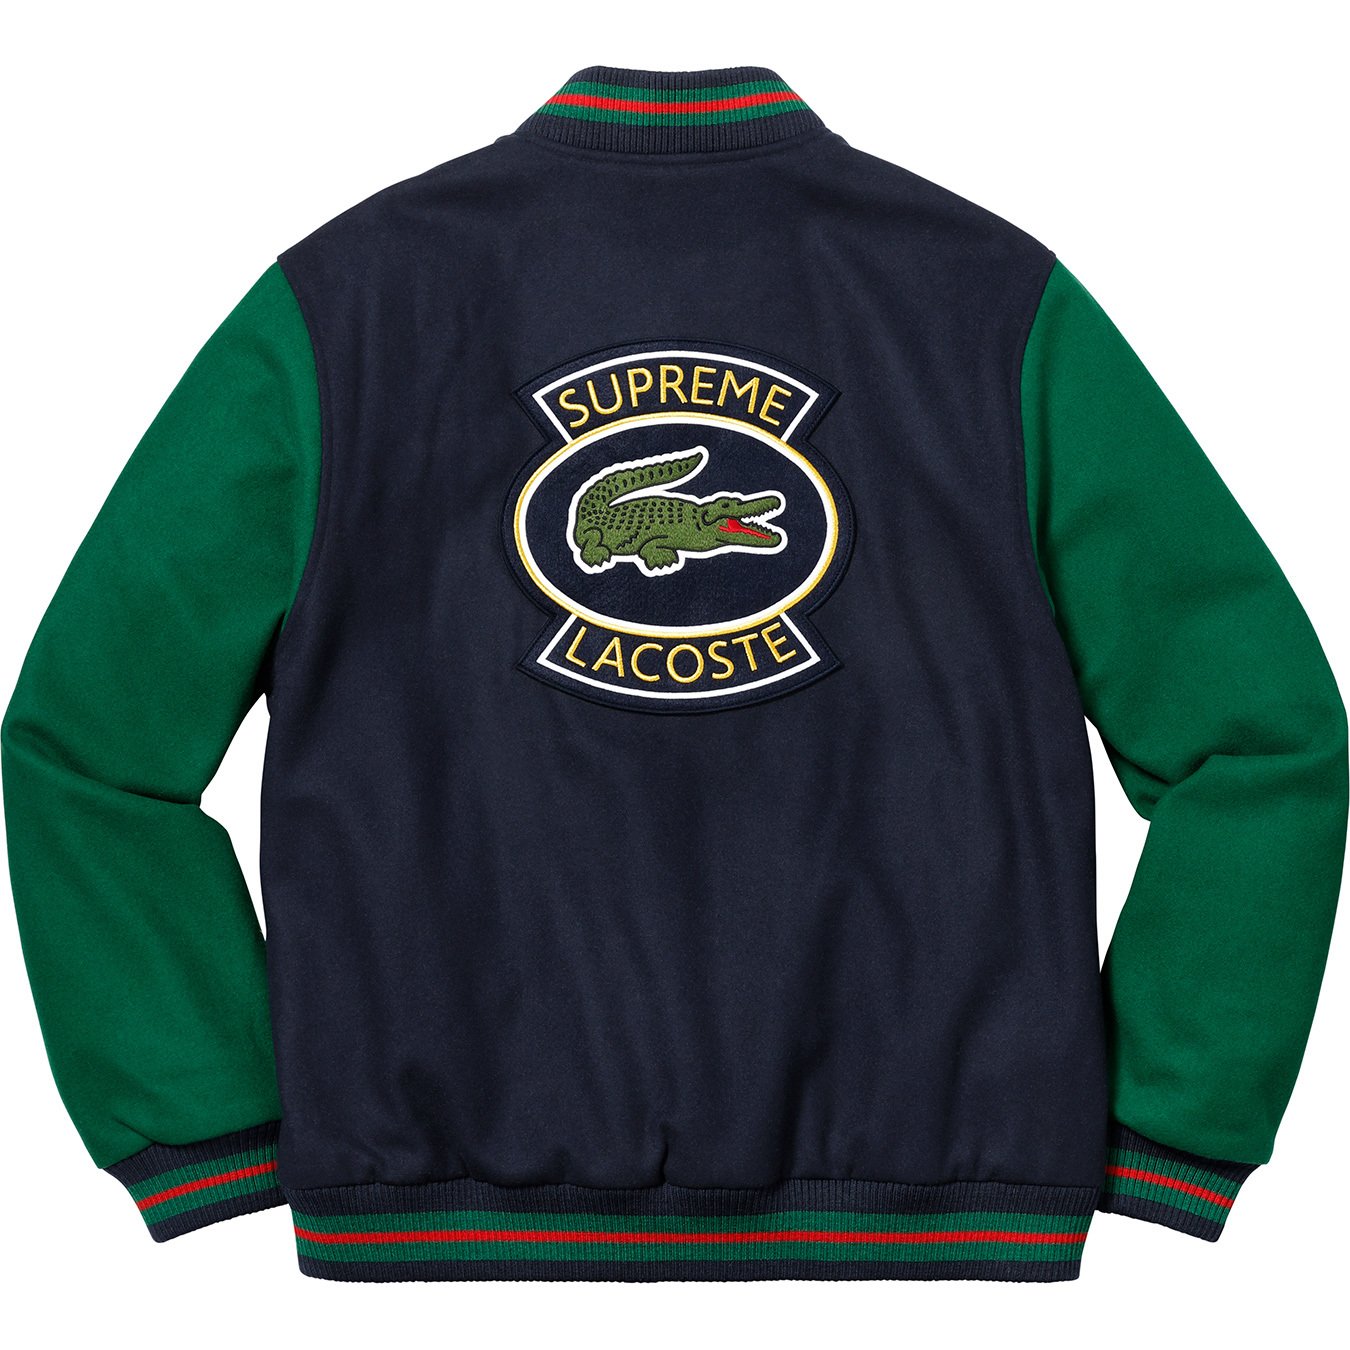 Lacoste Varsity Jacket |Black and Gold| [Brand New] - The Jacket Wear –  Desgin Custom Varsity & Custom Letterman, Baseball, School Jacket